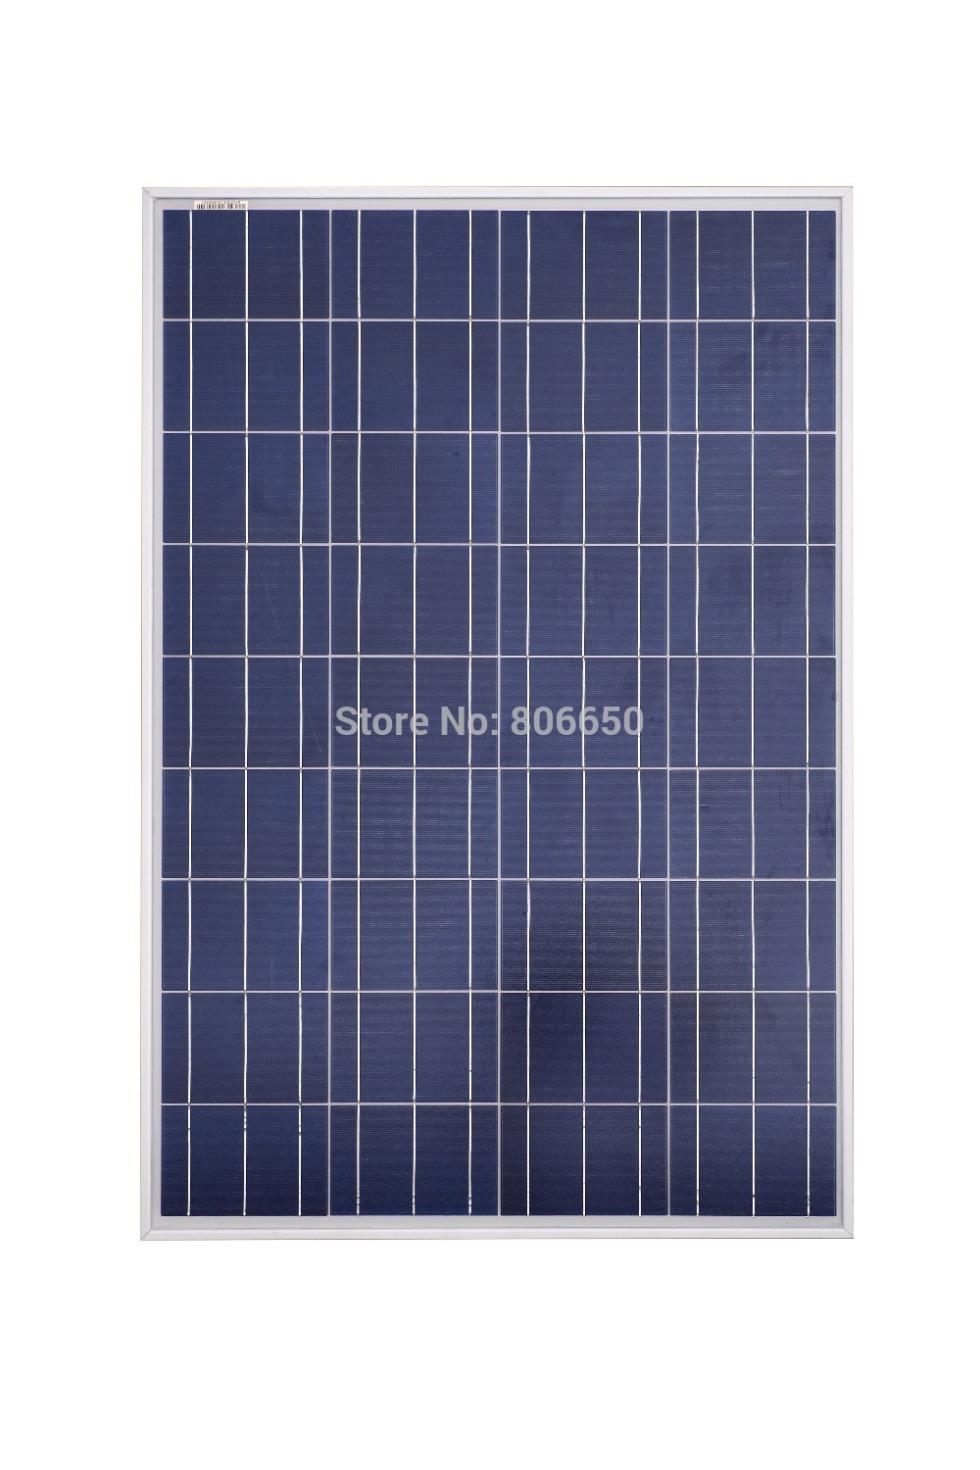 ECO 100w 100watt Solar Panel Module for 12V system free shipping in USA EU AU RU stock no taxis no duty *